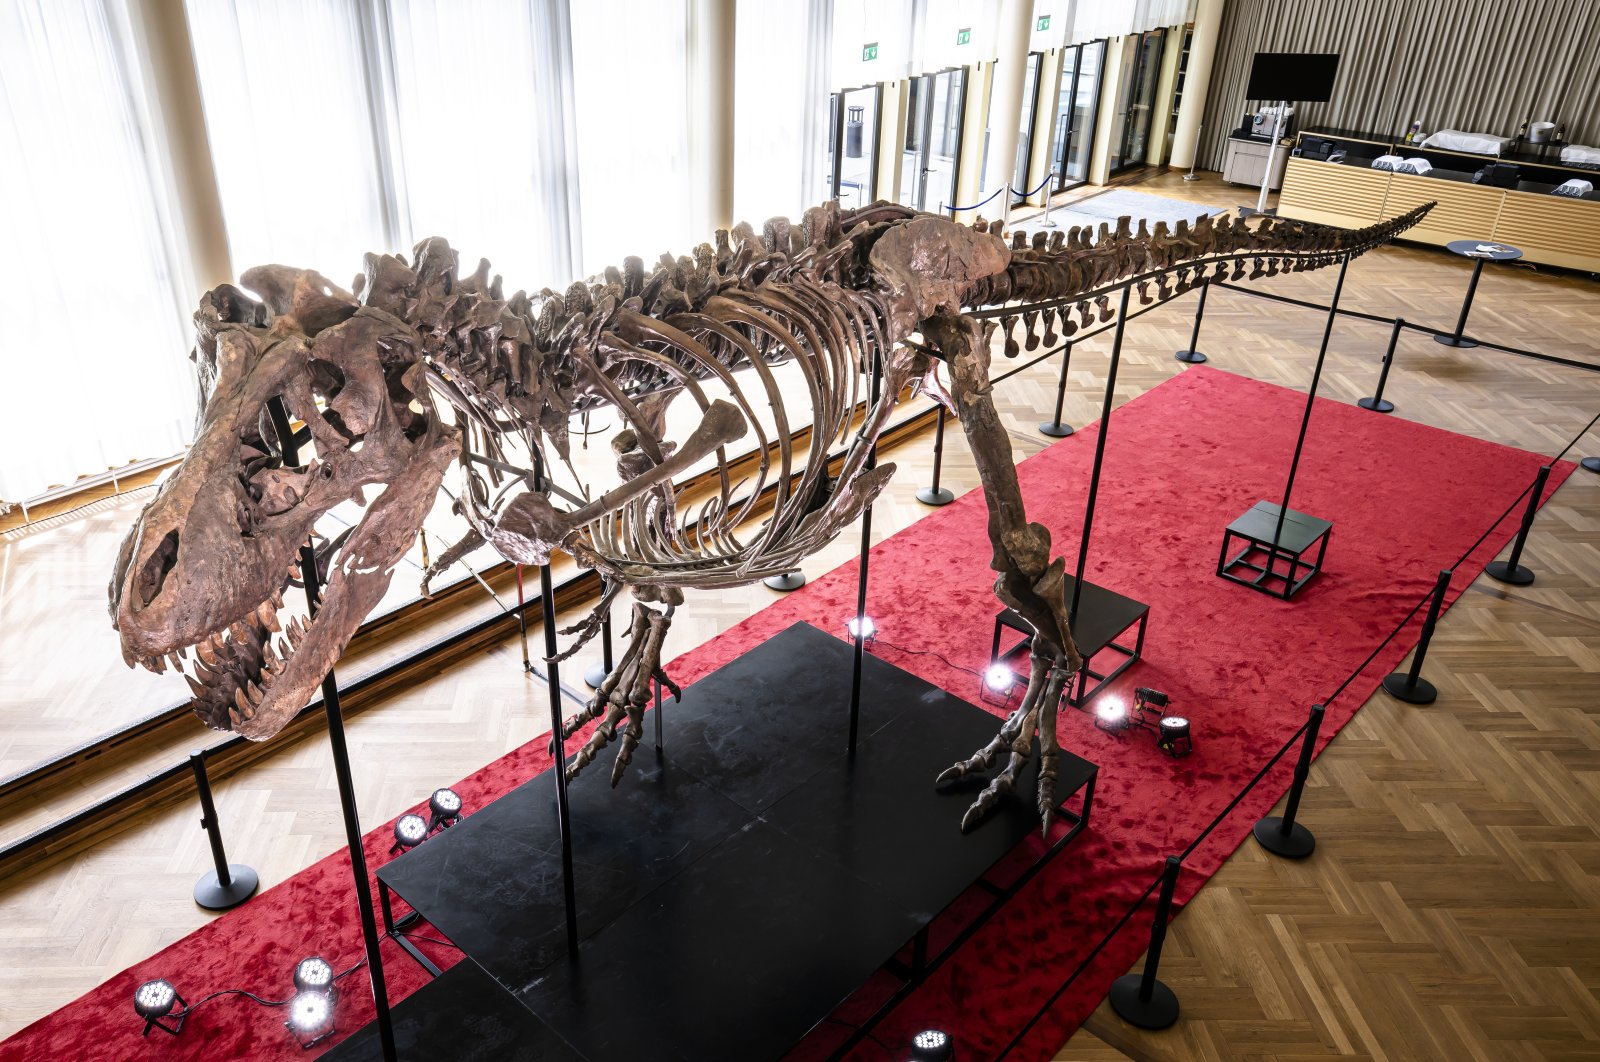 Kerangka T-Rex permata Jurassic langka akan dilelang bulan depan